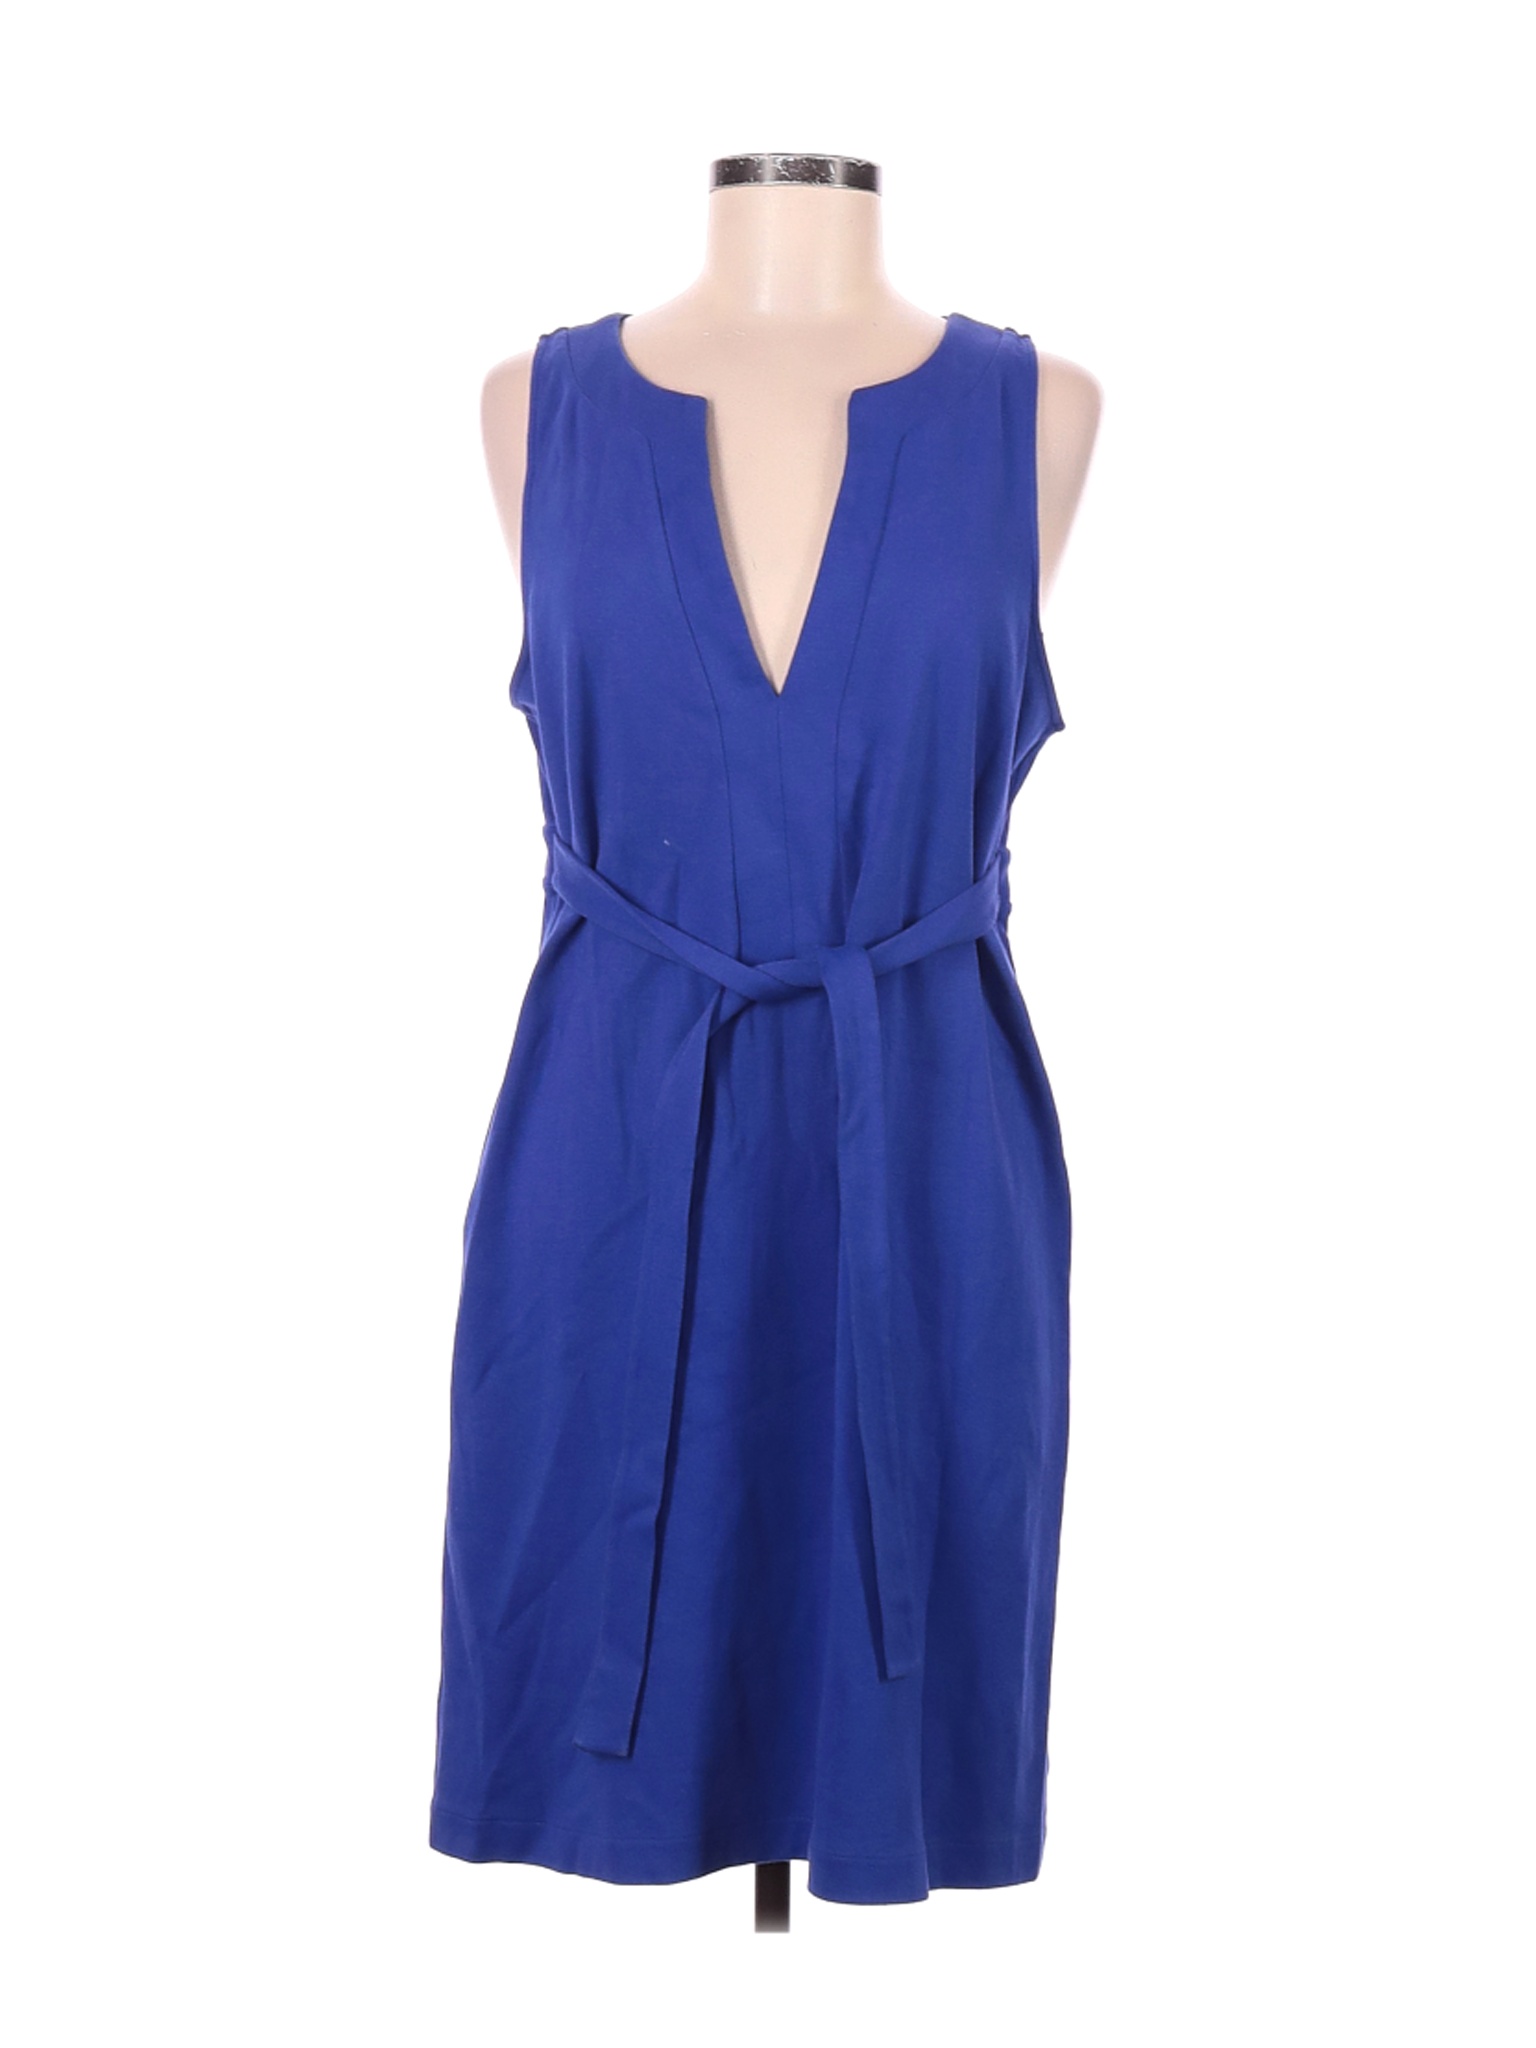 J.Crew Women Blue Casual Dress M | eBay